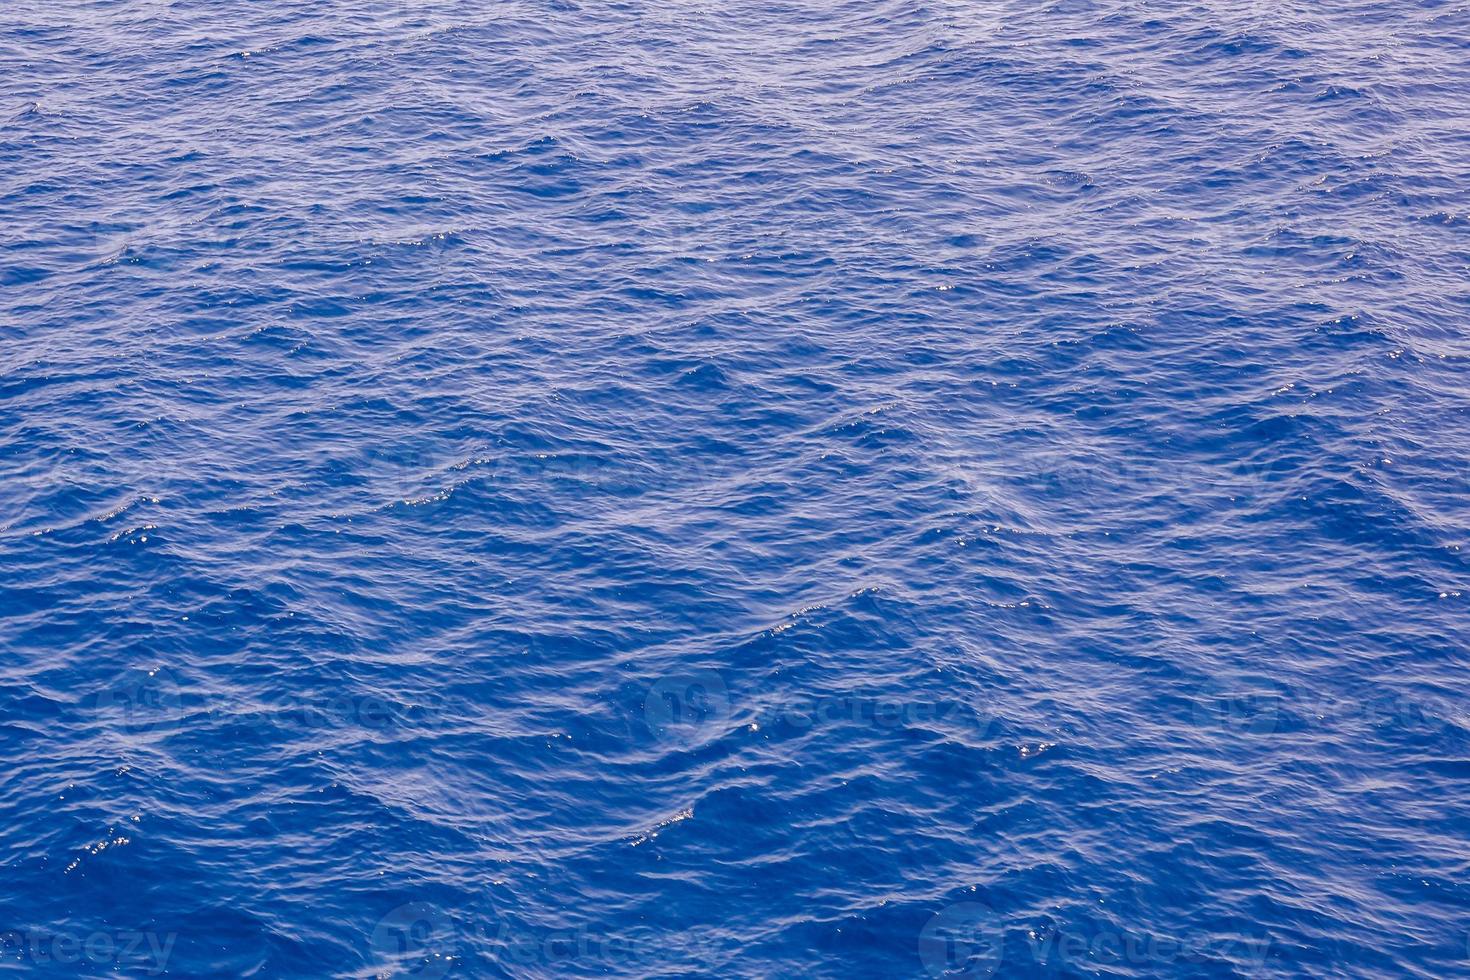 Sea water close-up view photo